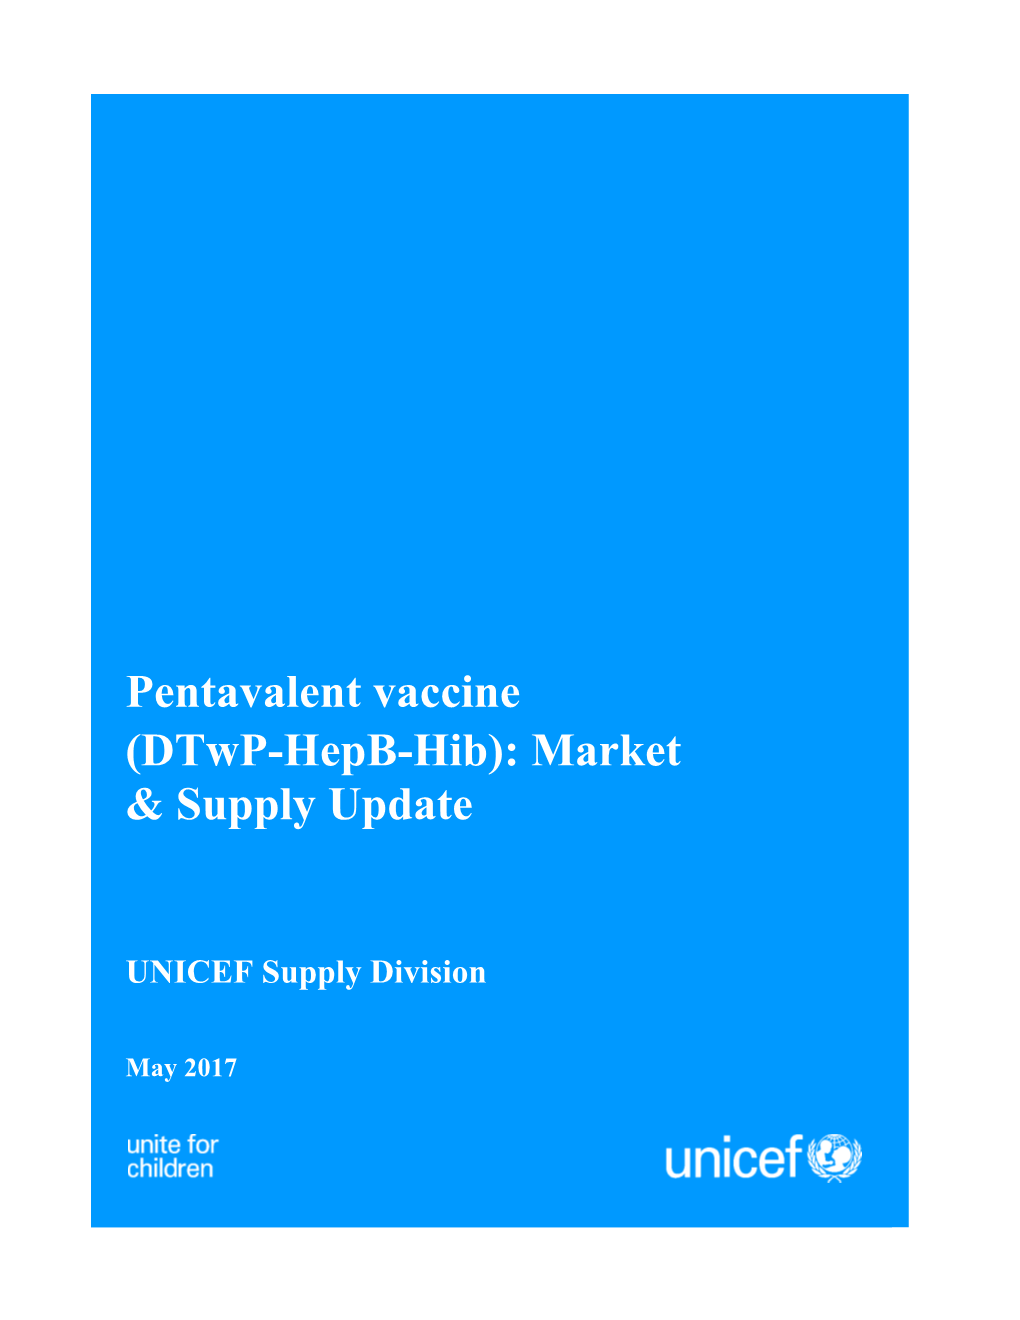 Pentavalent Vaccine (Dtwp-Hepb-Hib): Market & Supply Update May 2017